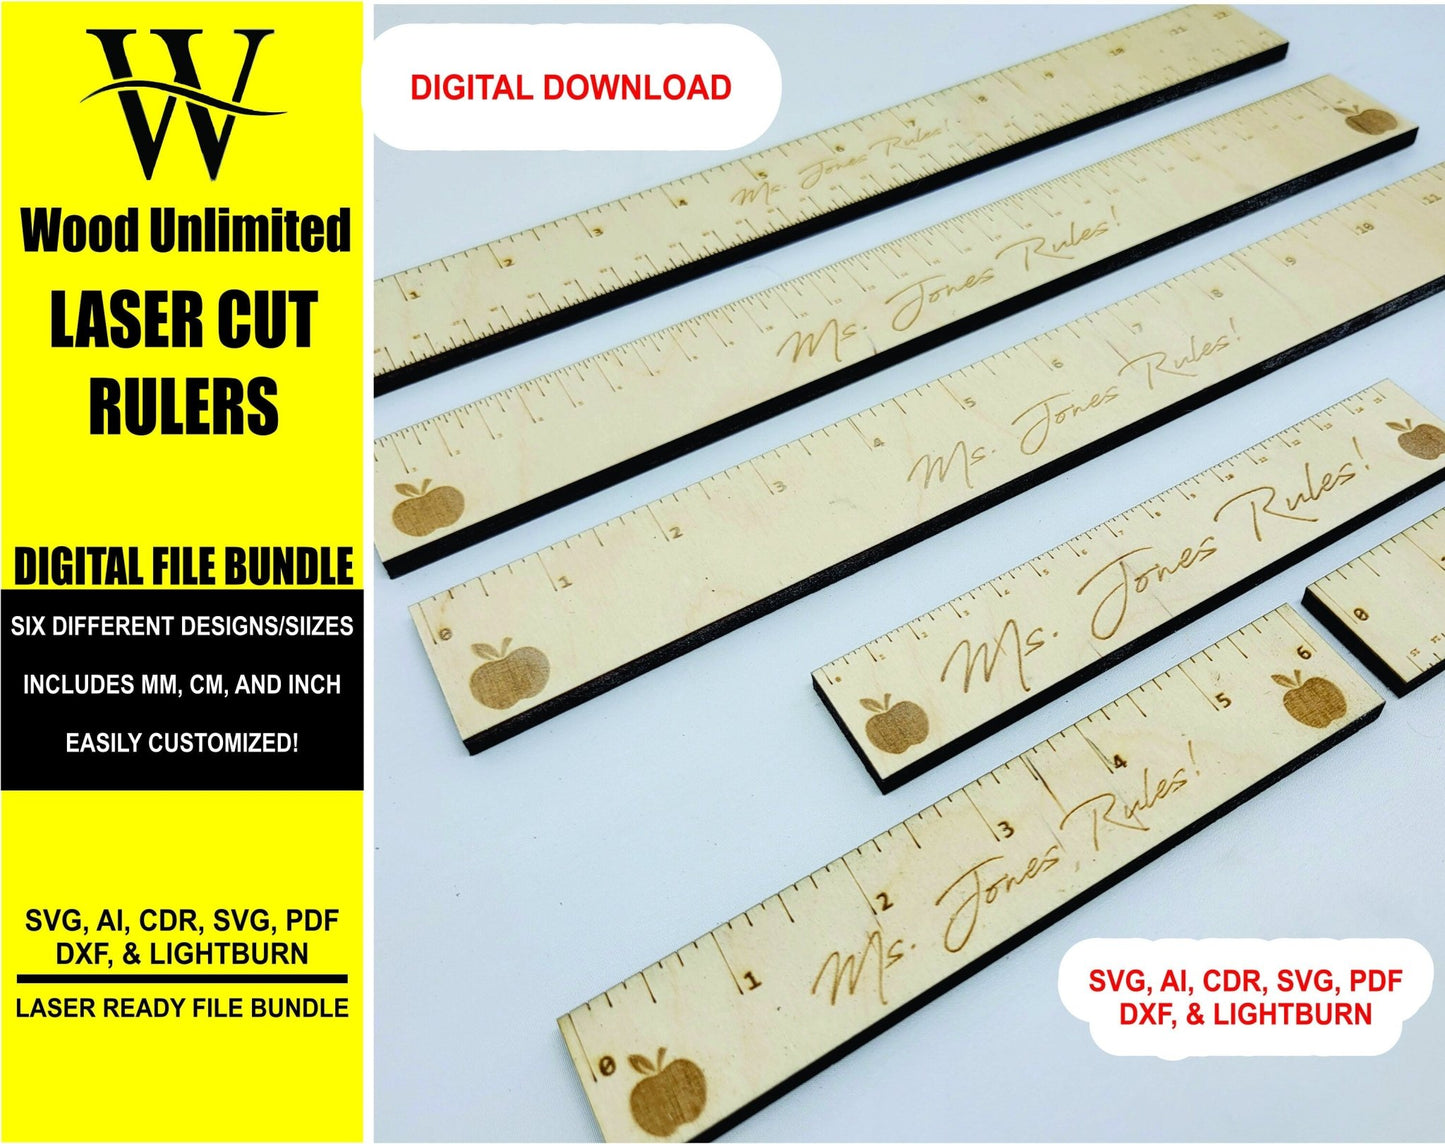 Laser Ready Ruler Files - Inch, MM and CM Rulers - Ruler Glowforge File - Lightburn - Omtech - CO2 Lasers File - Laser Cut Ruler File - Wood Unlimited#